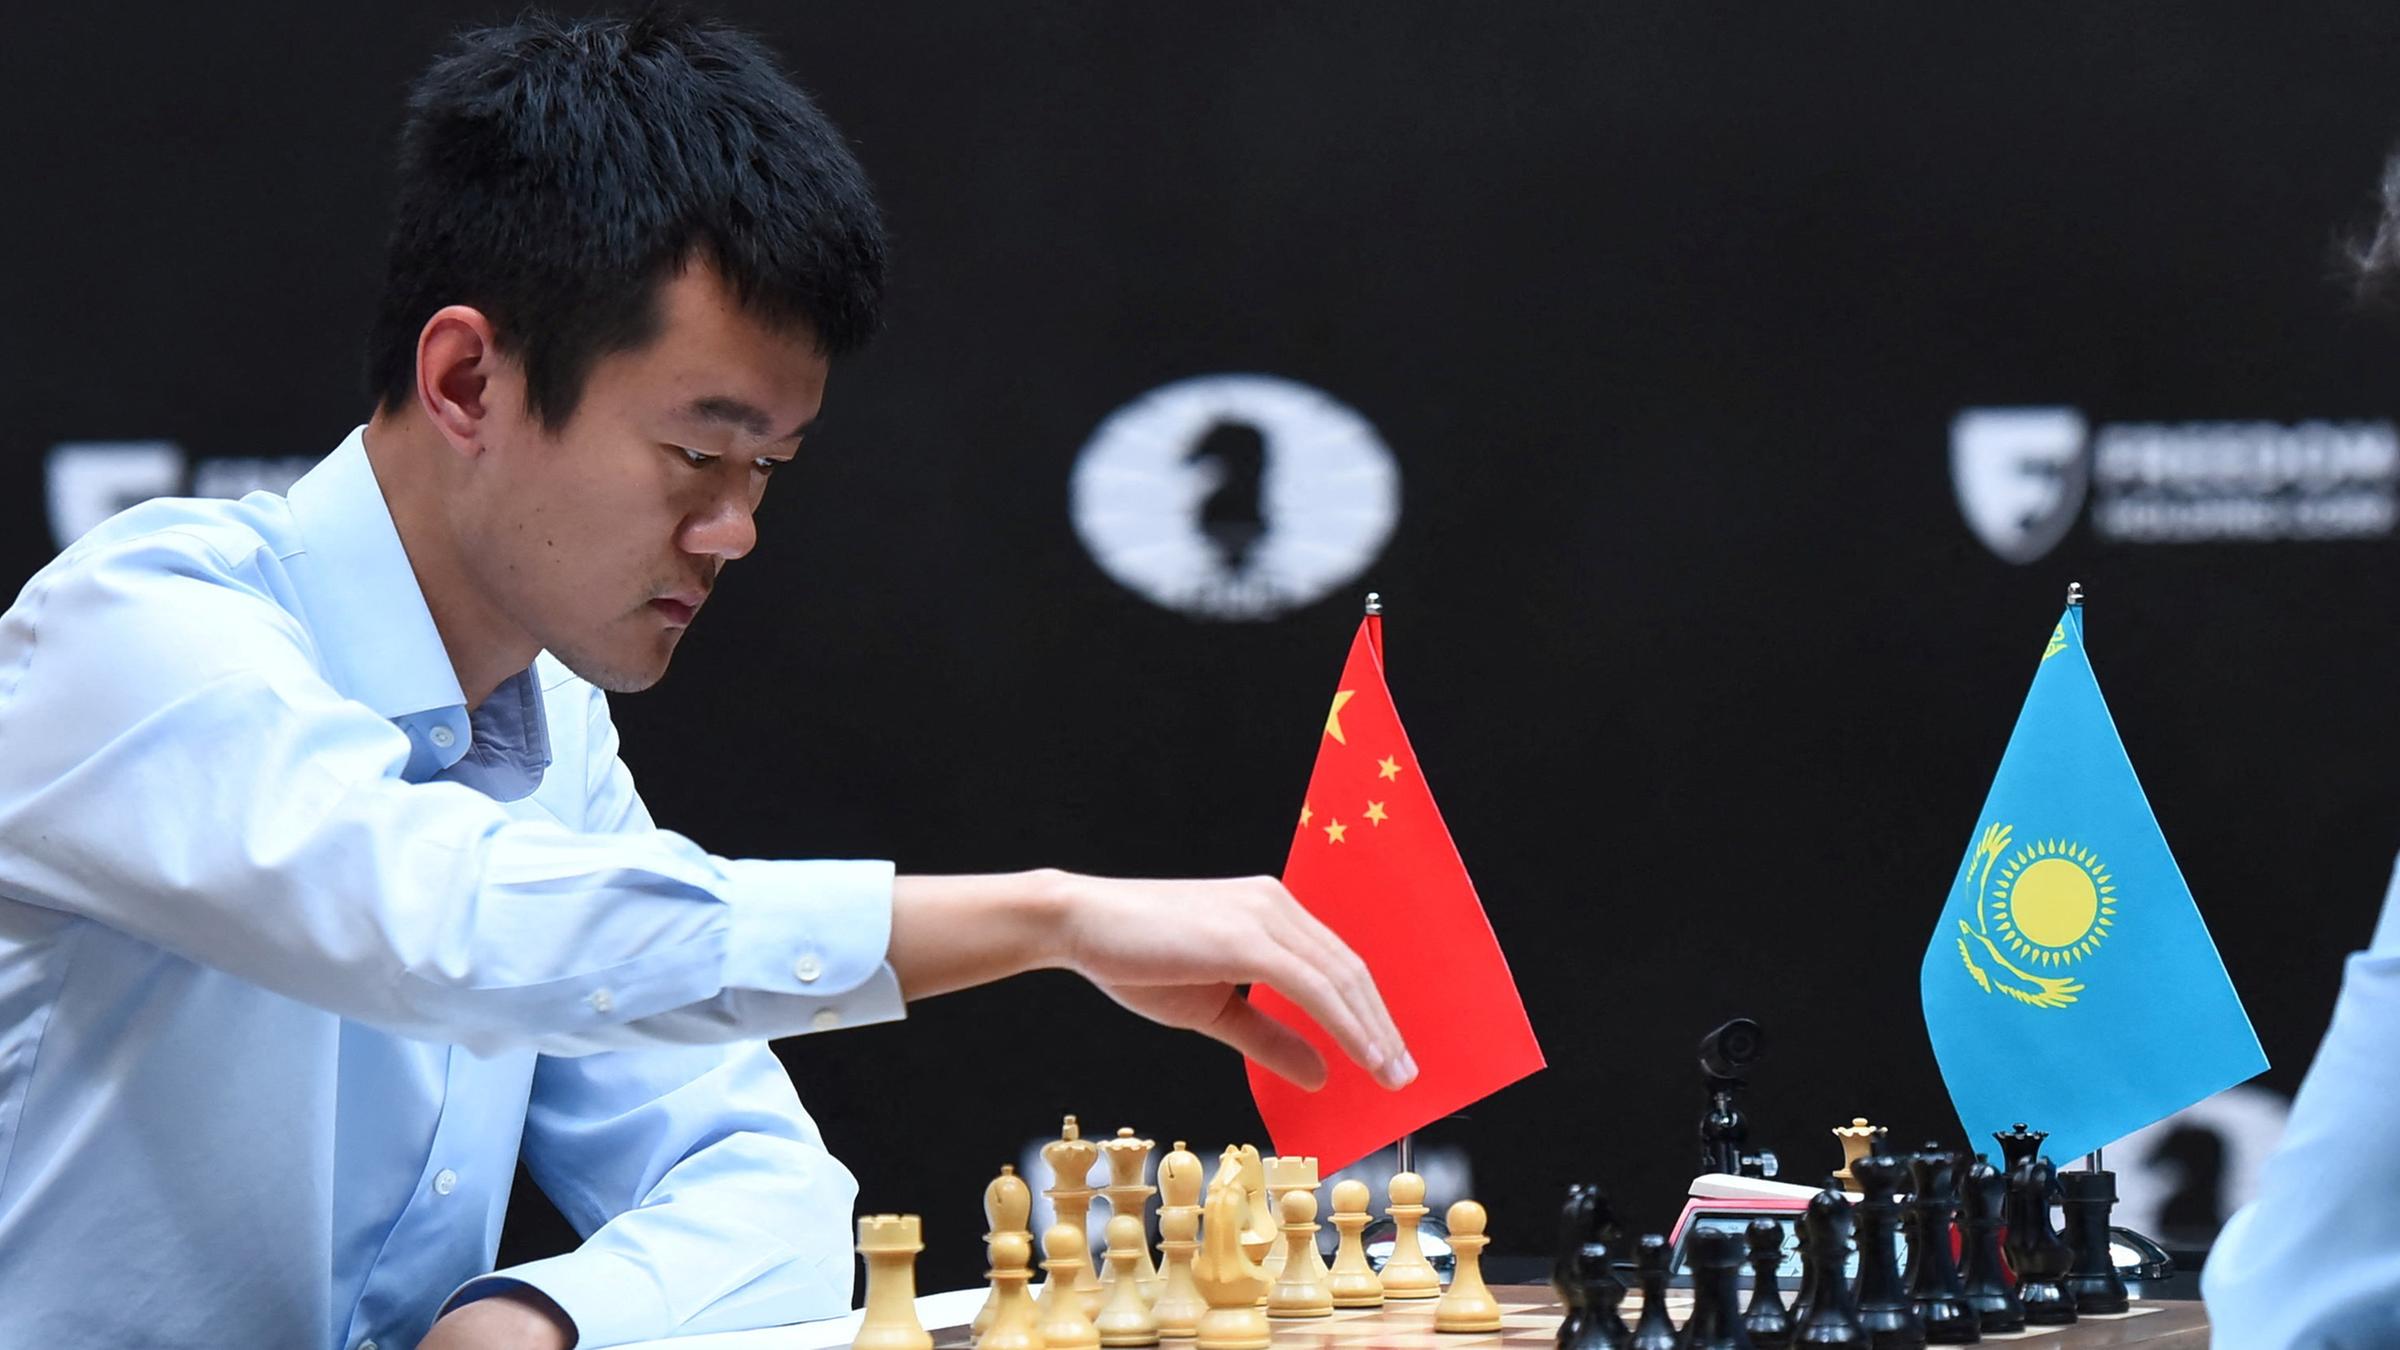 Ding Liren erster Schachweltmeister aus China